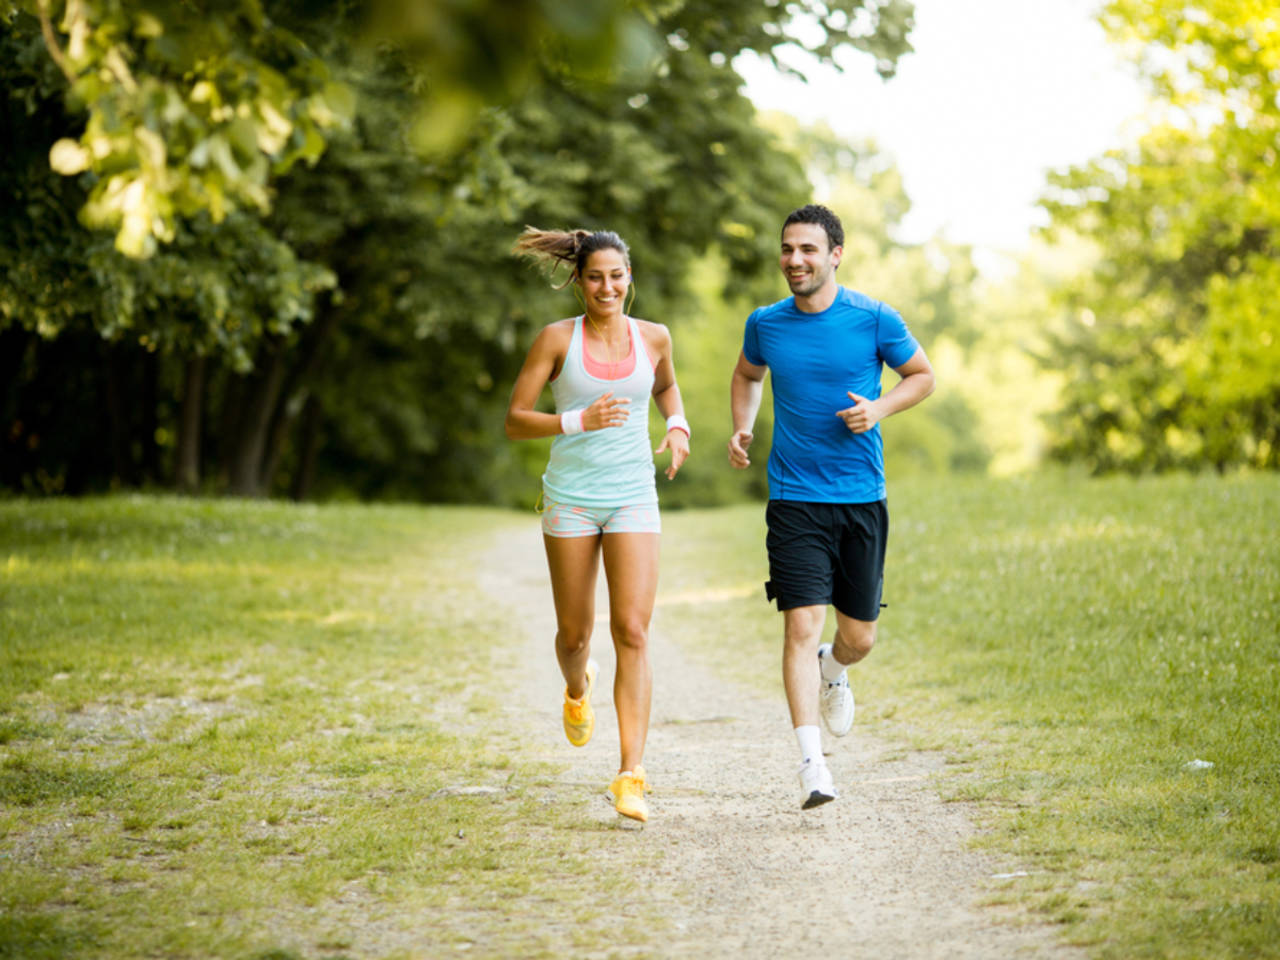 Running: Men instinctively run faster than women as it is more